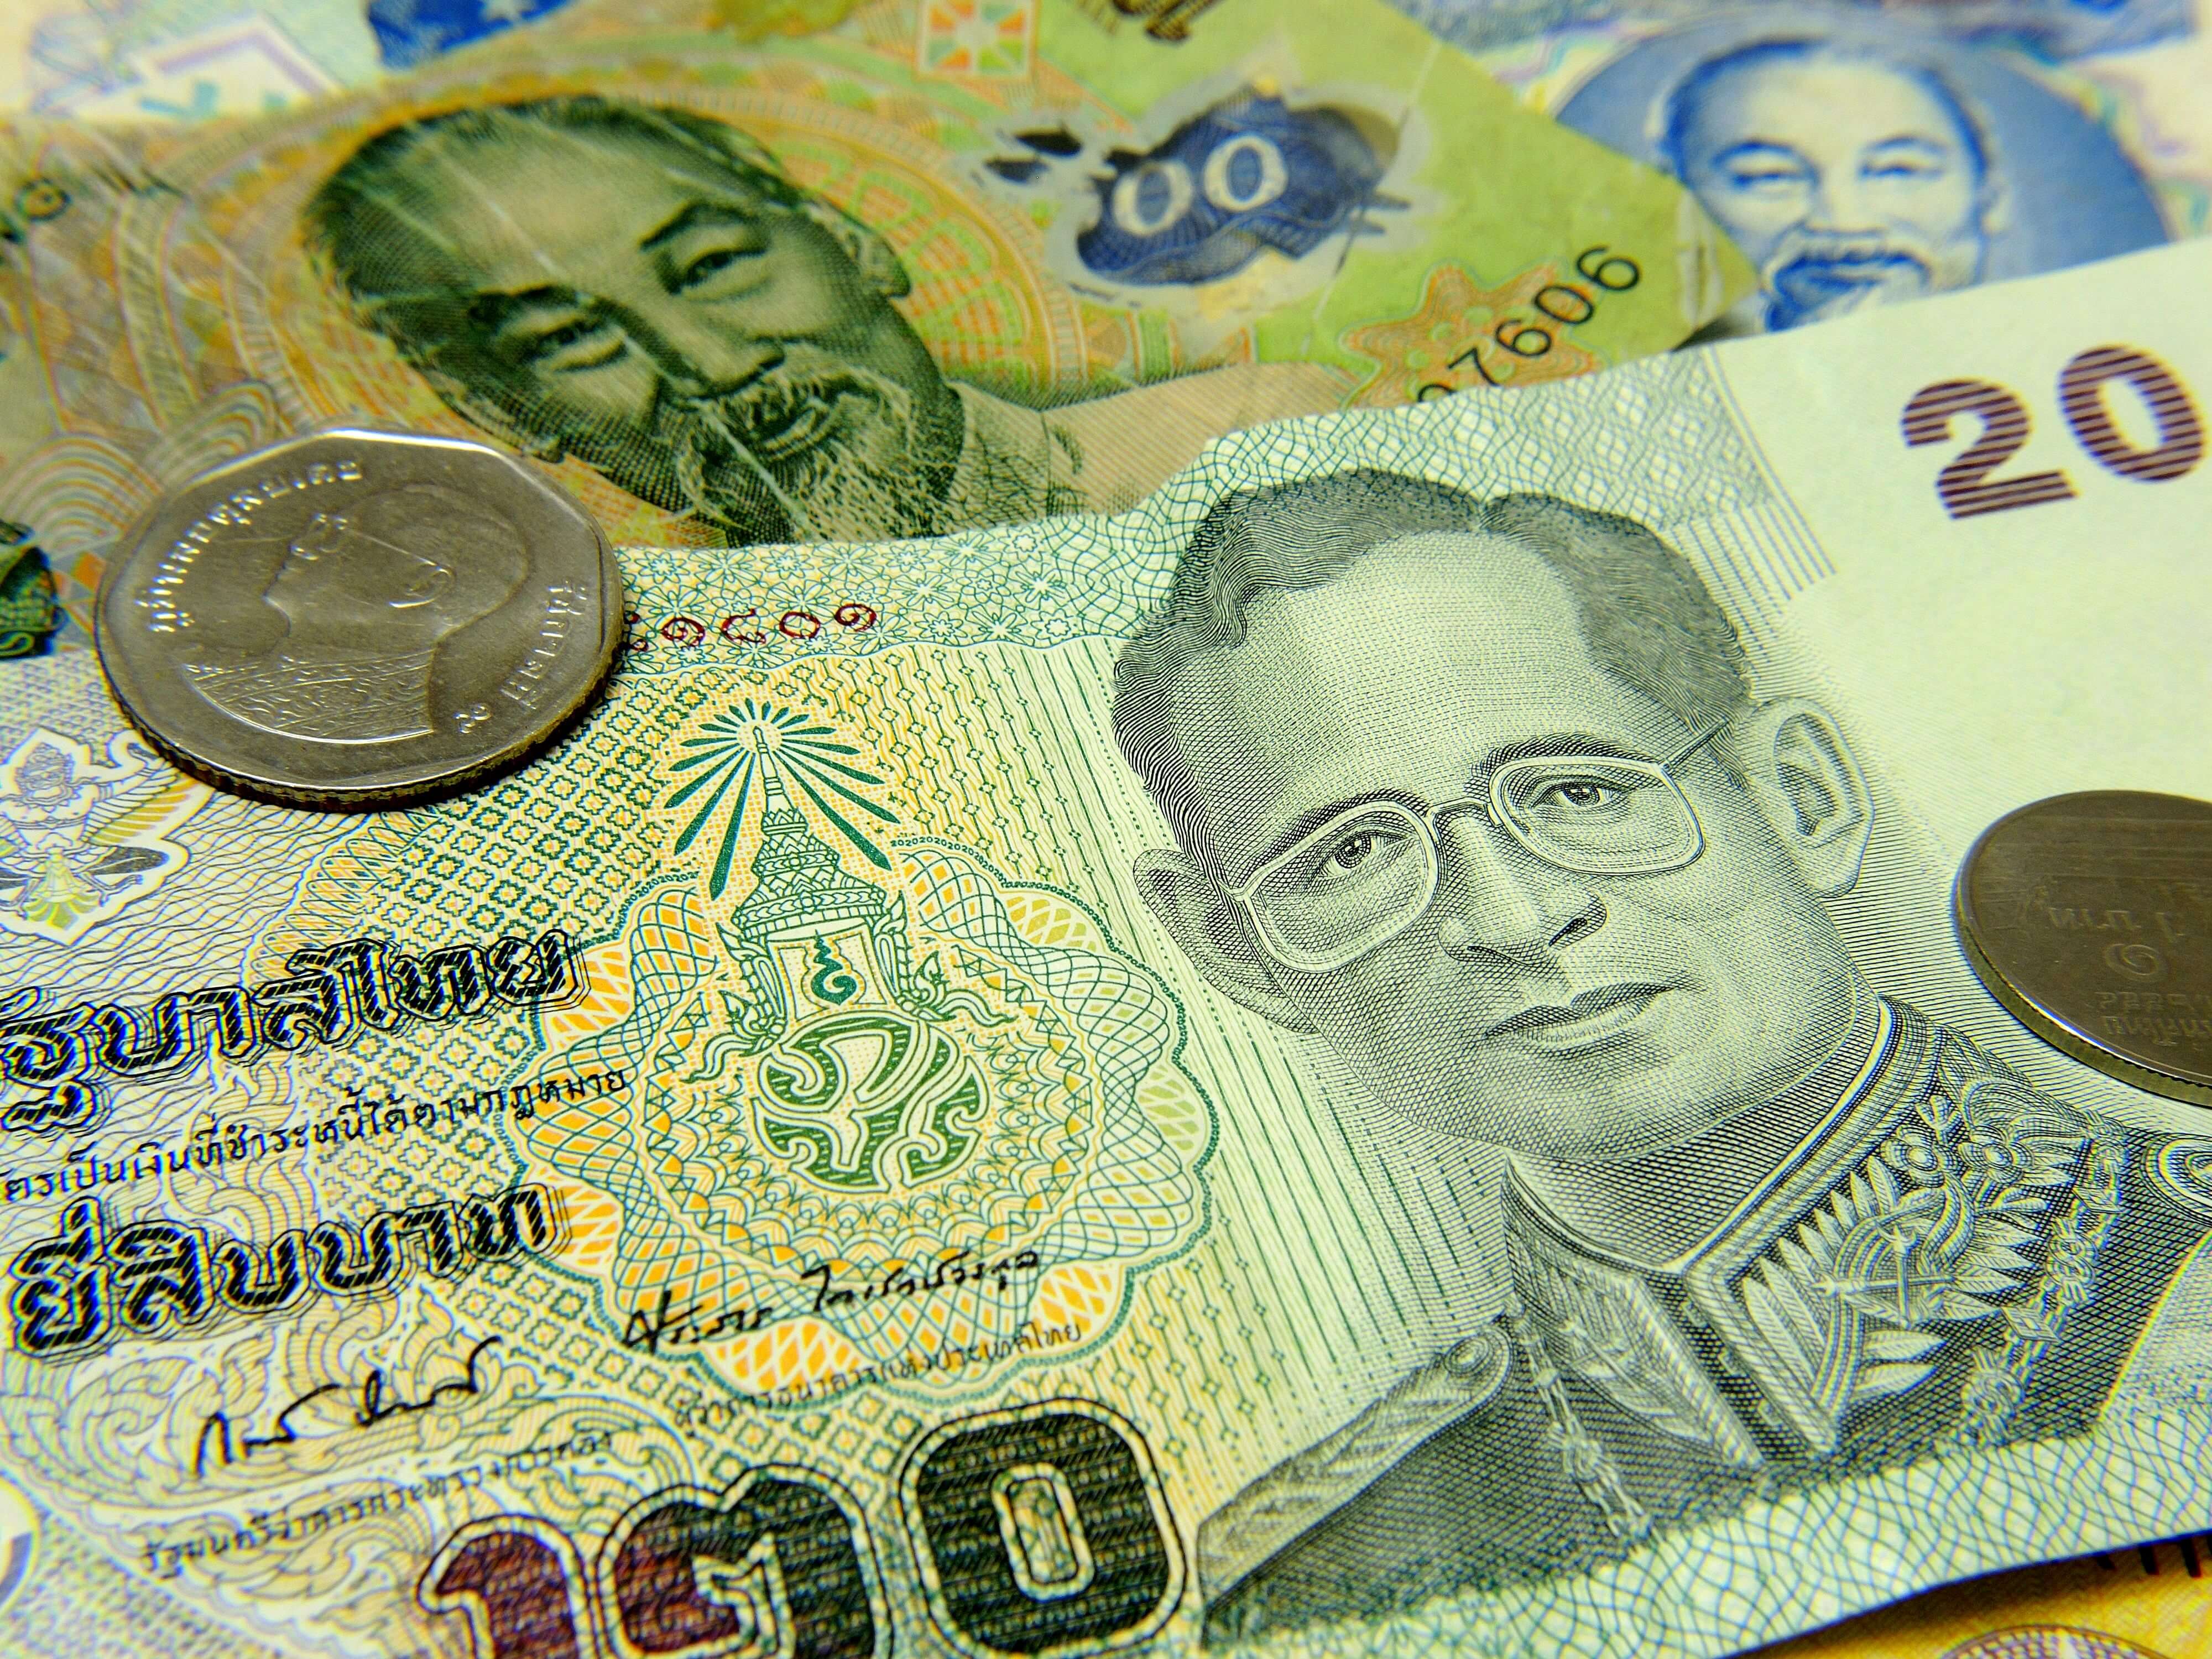 Евро или доллар в тайланде. Таиланд валюта бат. Тайланд валюта тайский бат. Таиландский бат купюры. 100 Бат Тайланд.